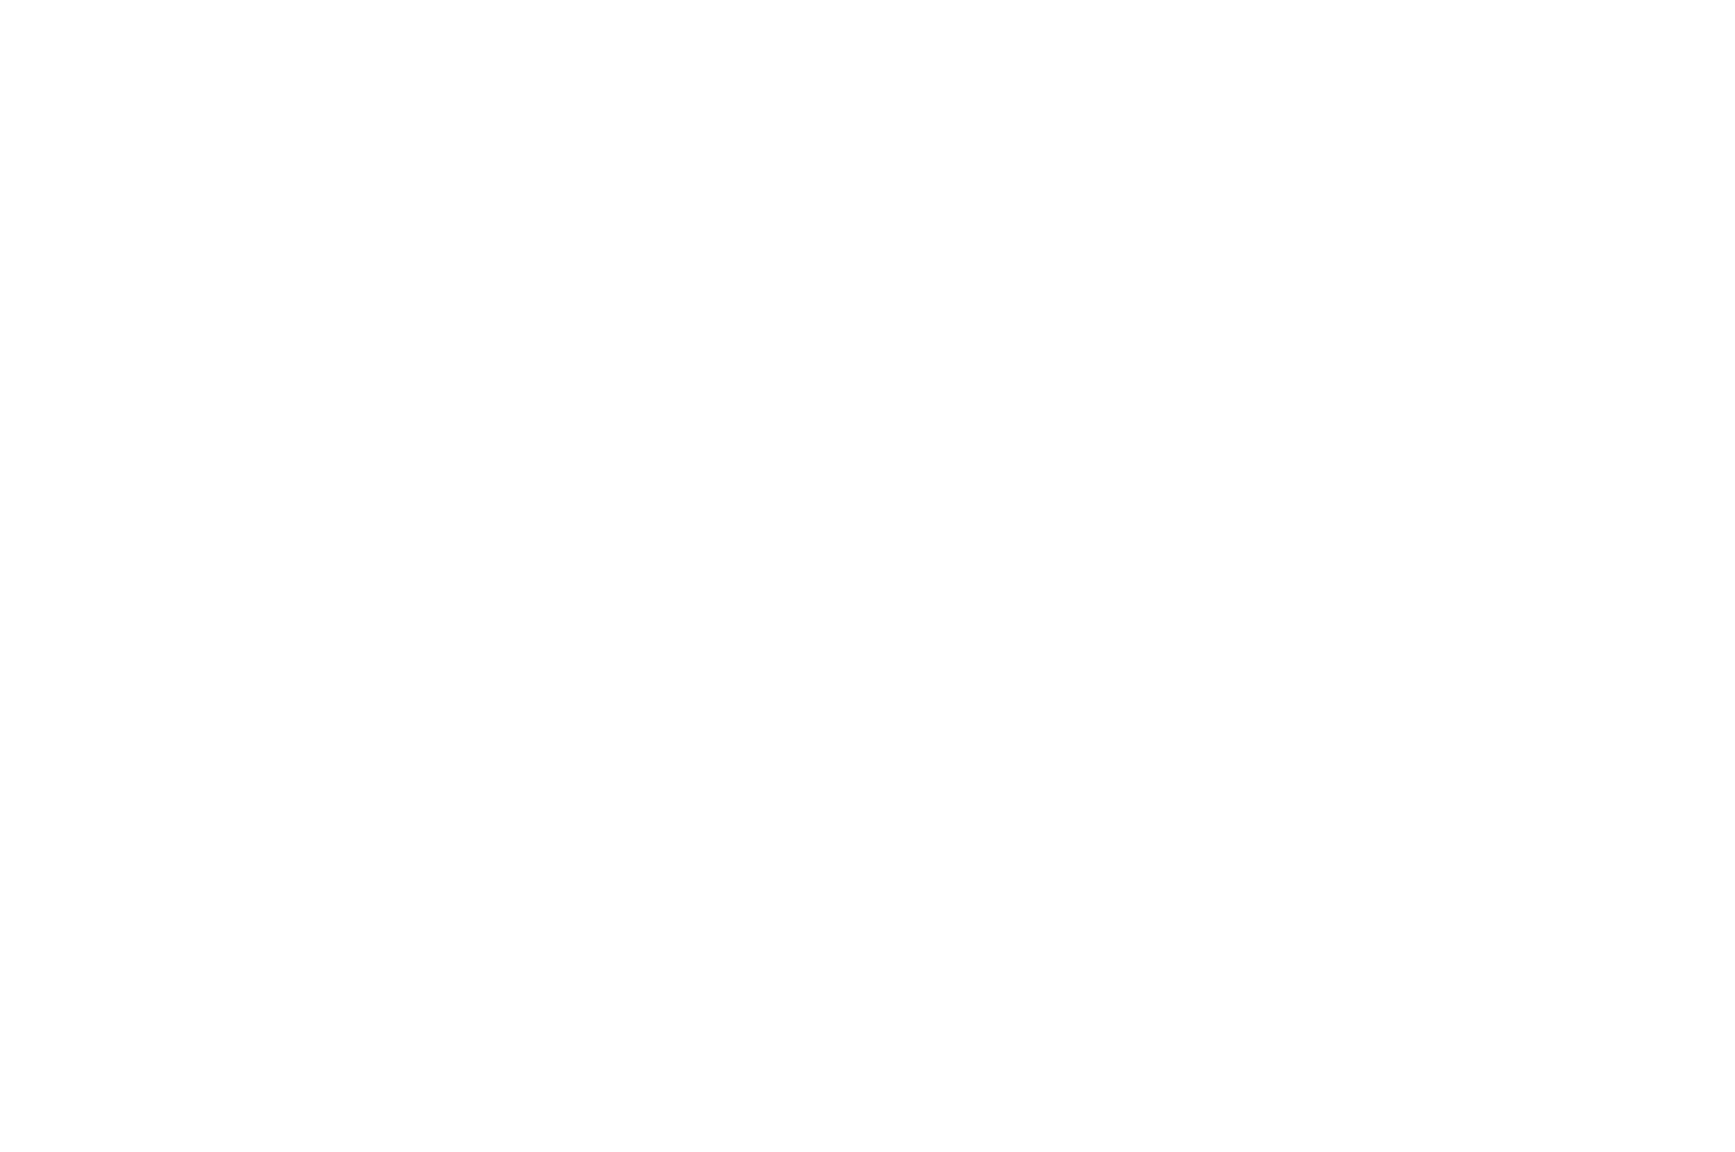 OFFICIAL SELECTION - Idyllwild International Festival of Cinema - 2018